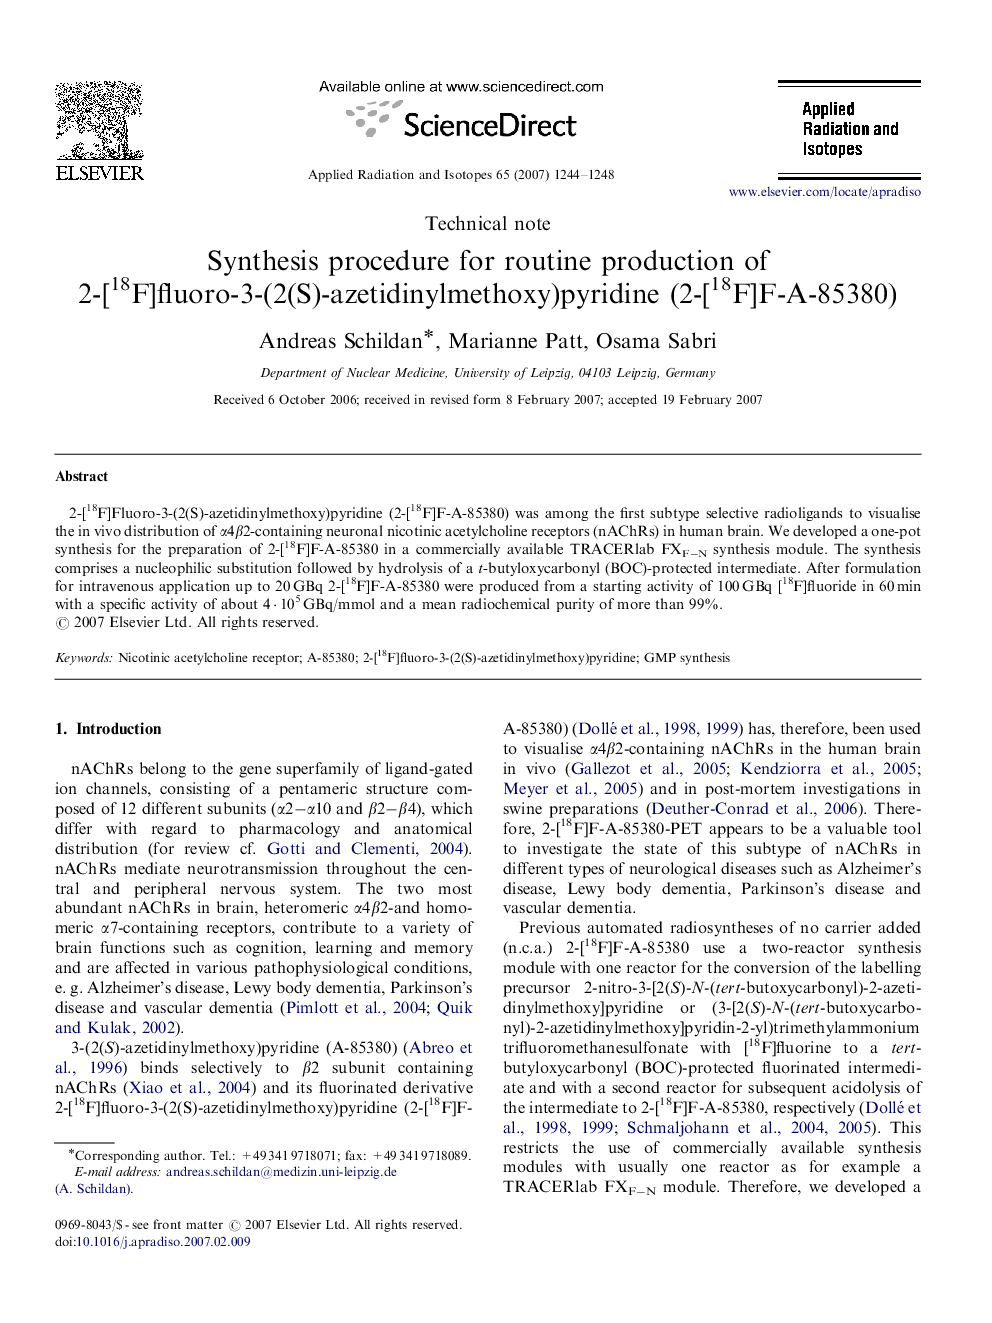 Synthesis procedure for routine production of 2-[18F]fluoro-3-(2(S)-azetidinylmethoxy)pyridine (2-[18F]F-A-85380)